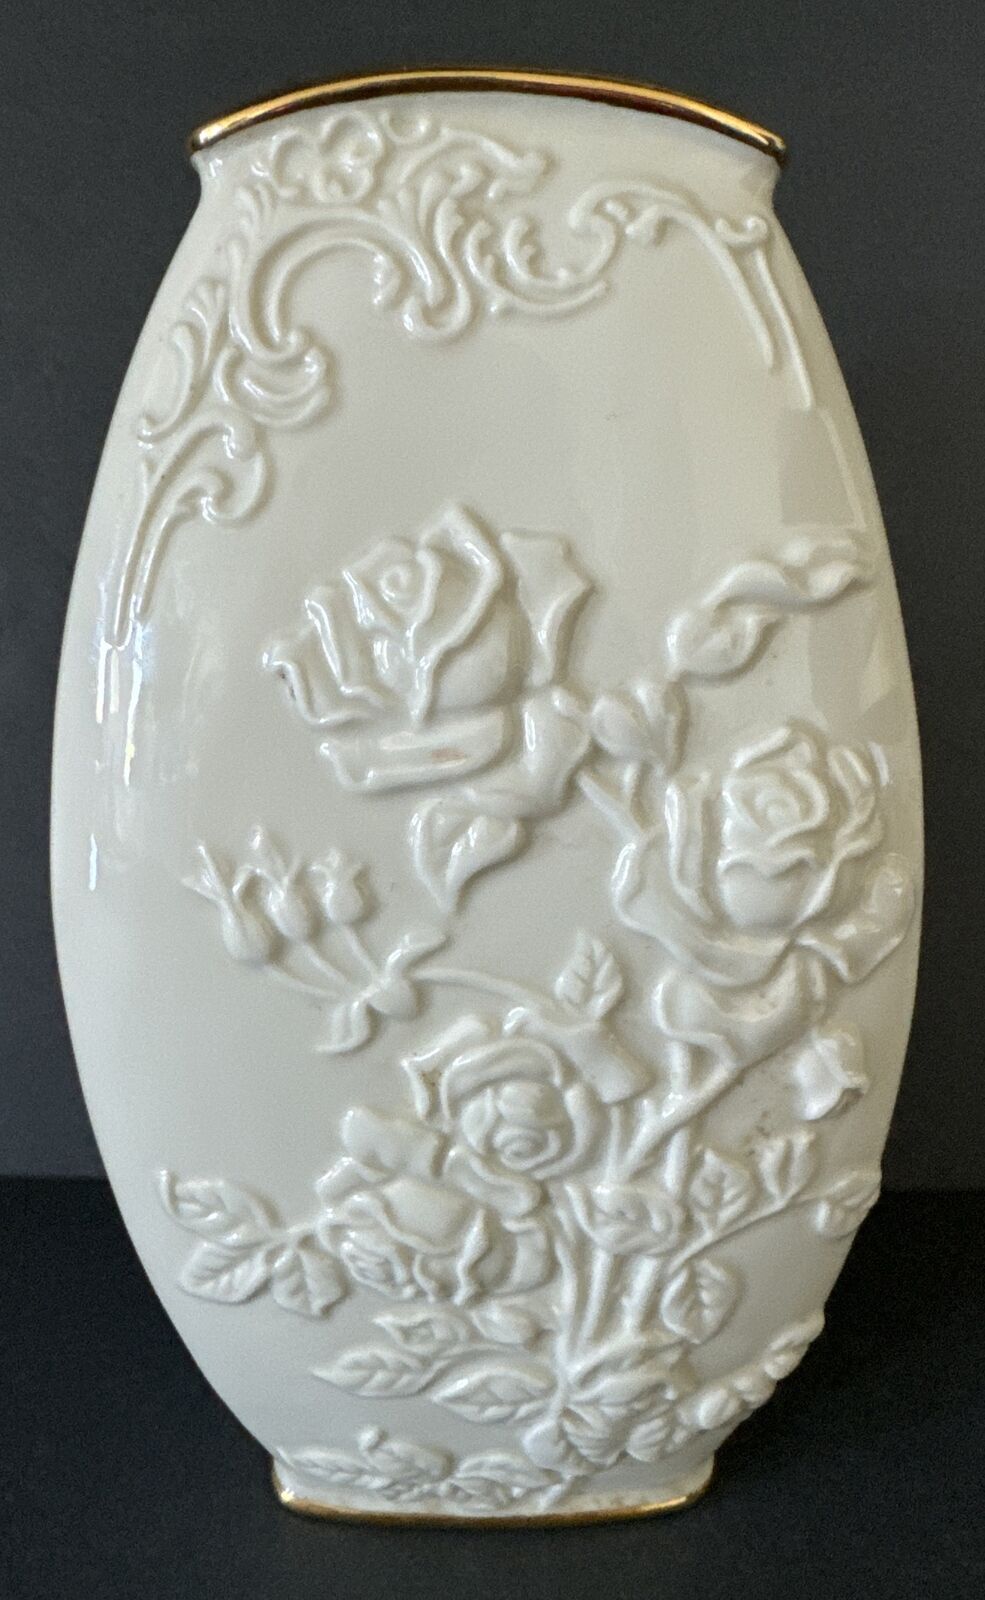 Lenox Embossed Roses Ivory Porcelain Vase With 24K Gold Trim 8” Tall x 4.5” Long